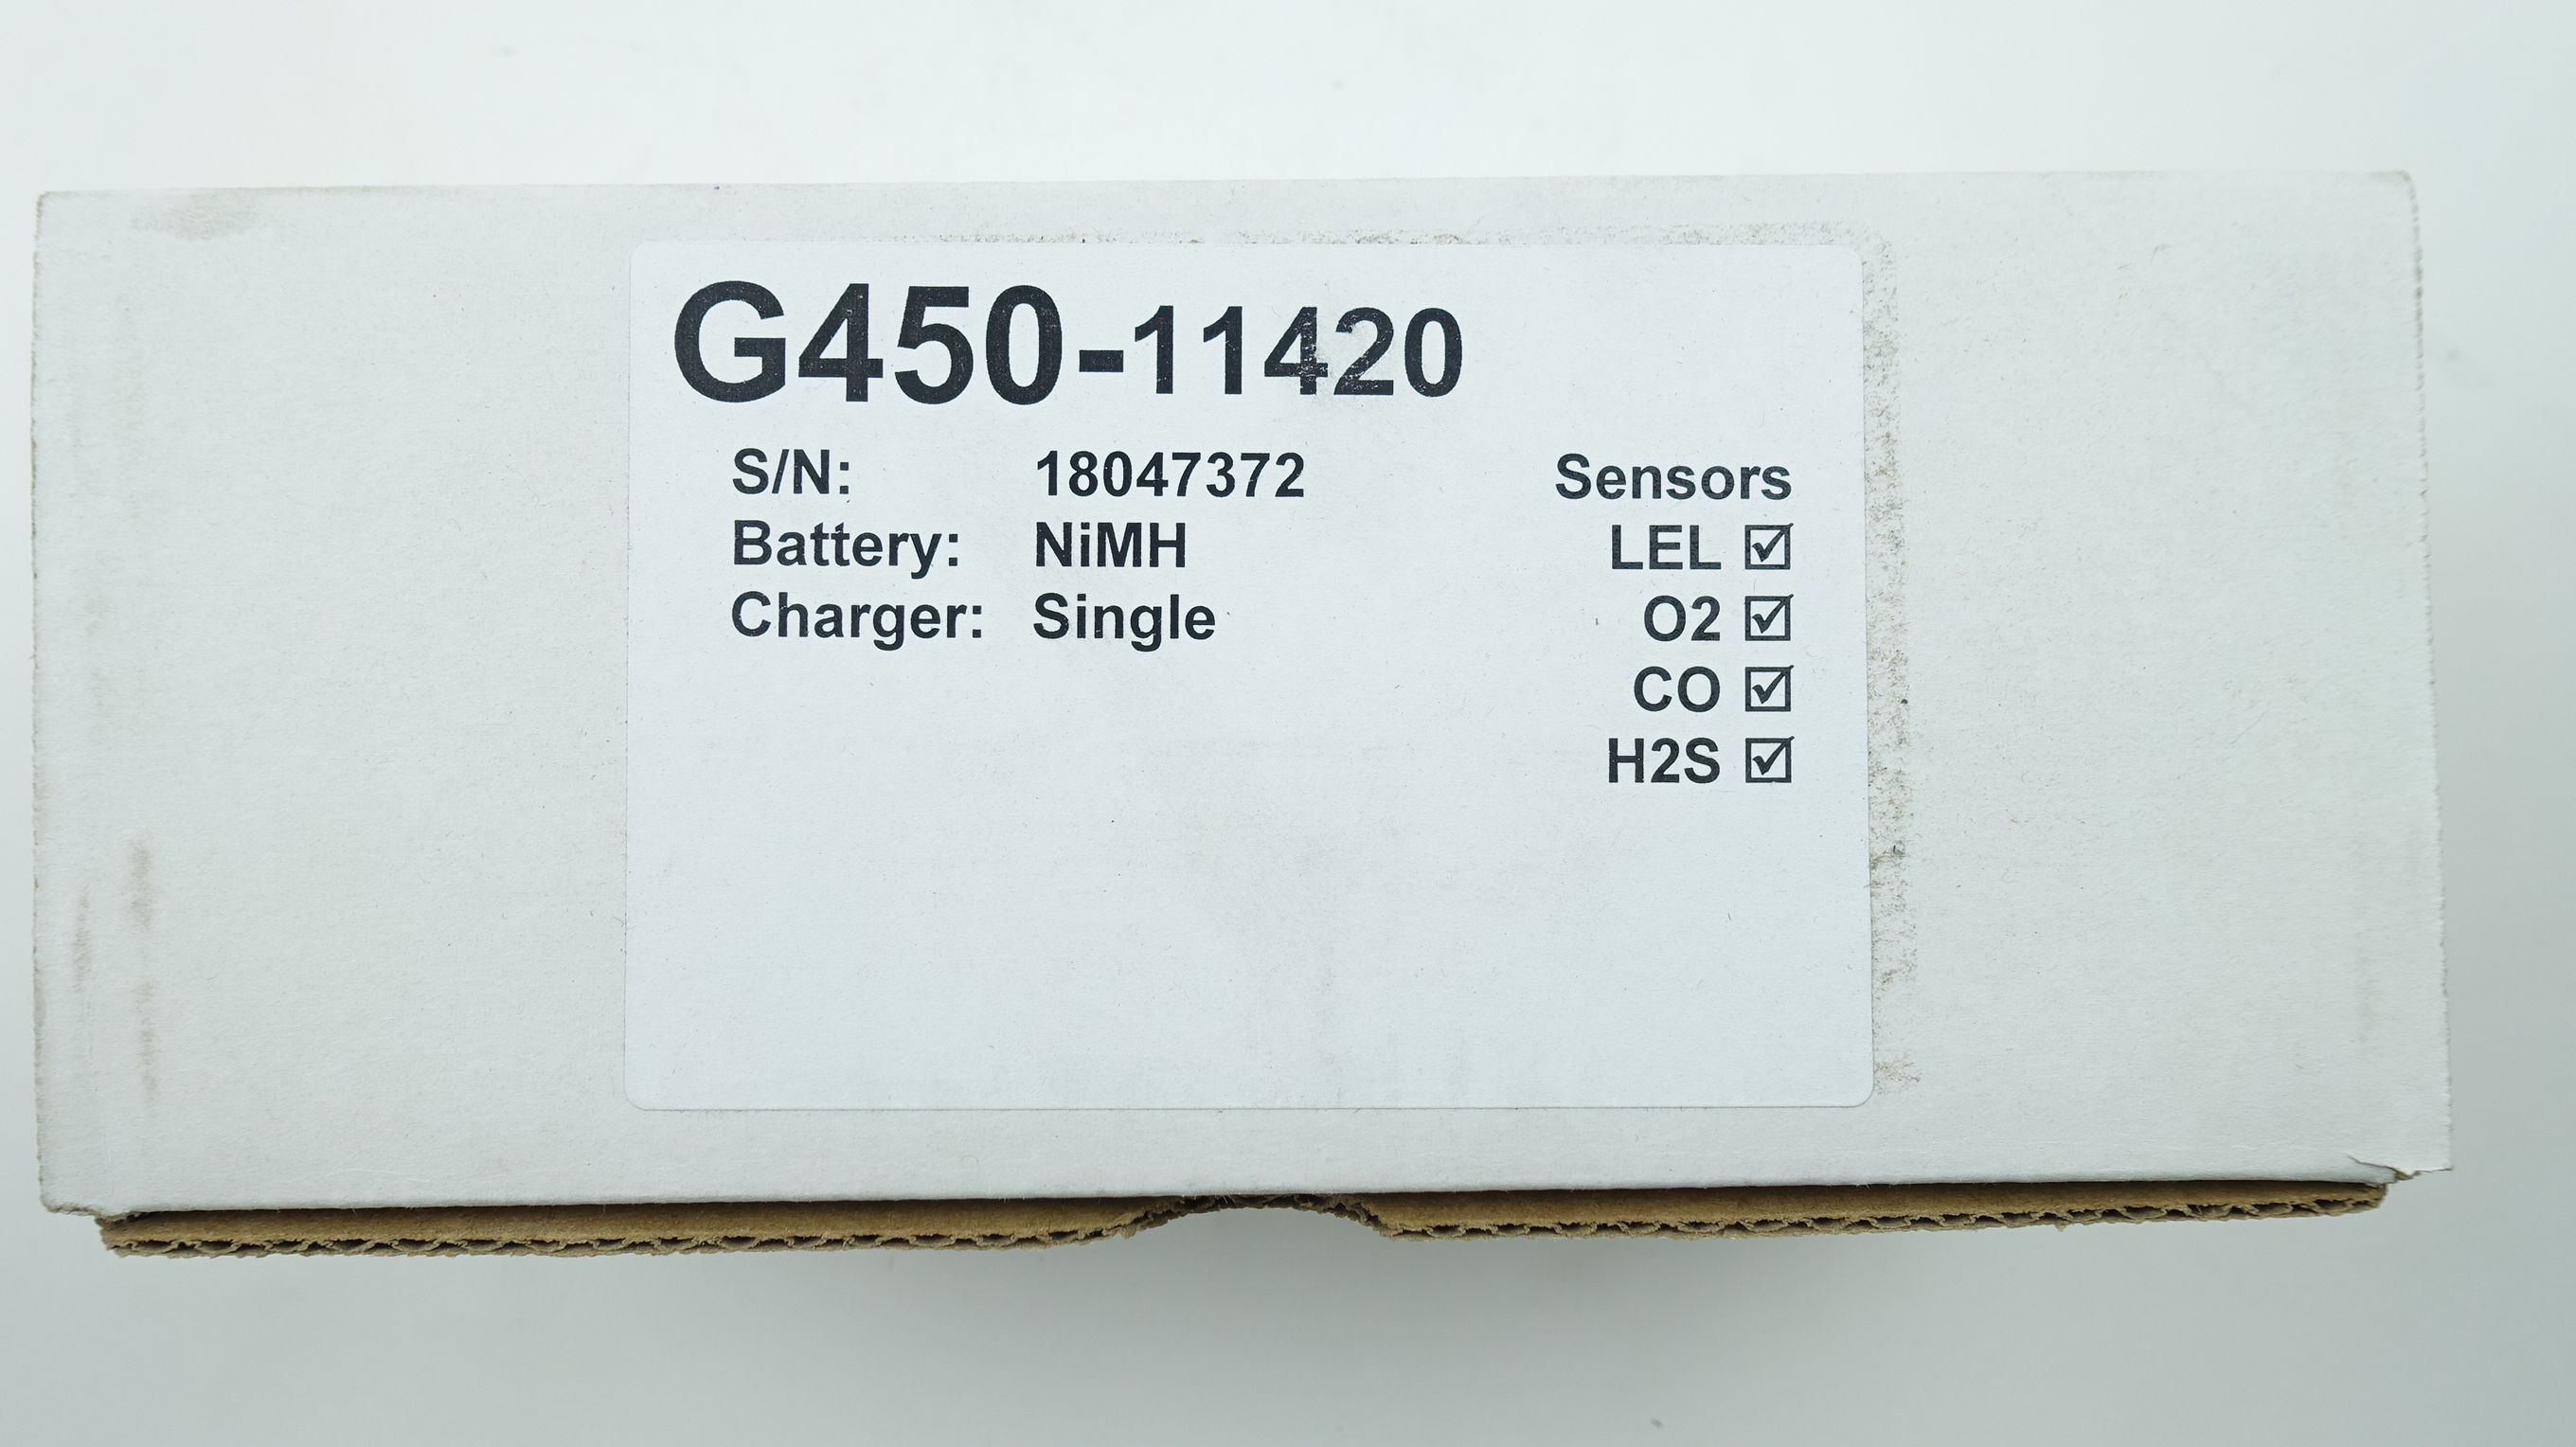 New GFG G450-11420 Instrumentation Monitor CO O2 LEL H2s NiMH Battery - image 11